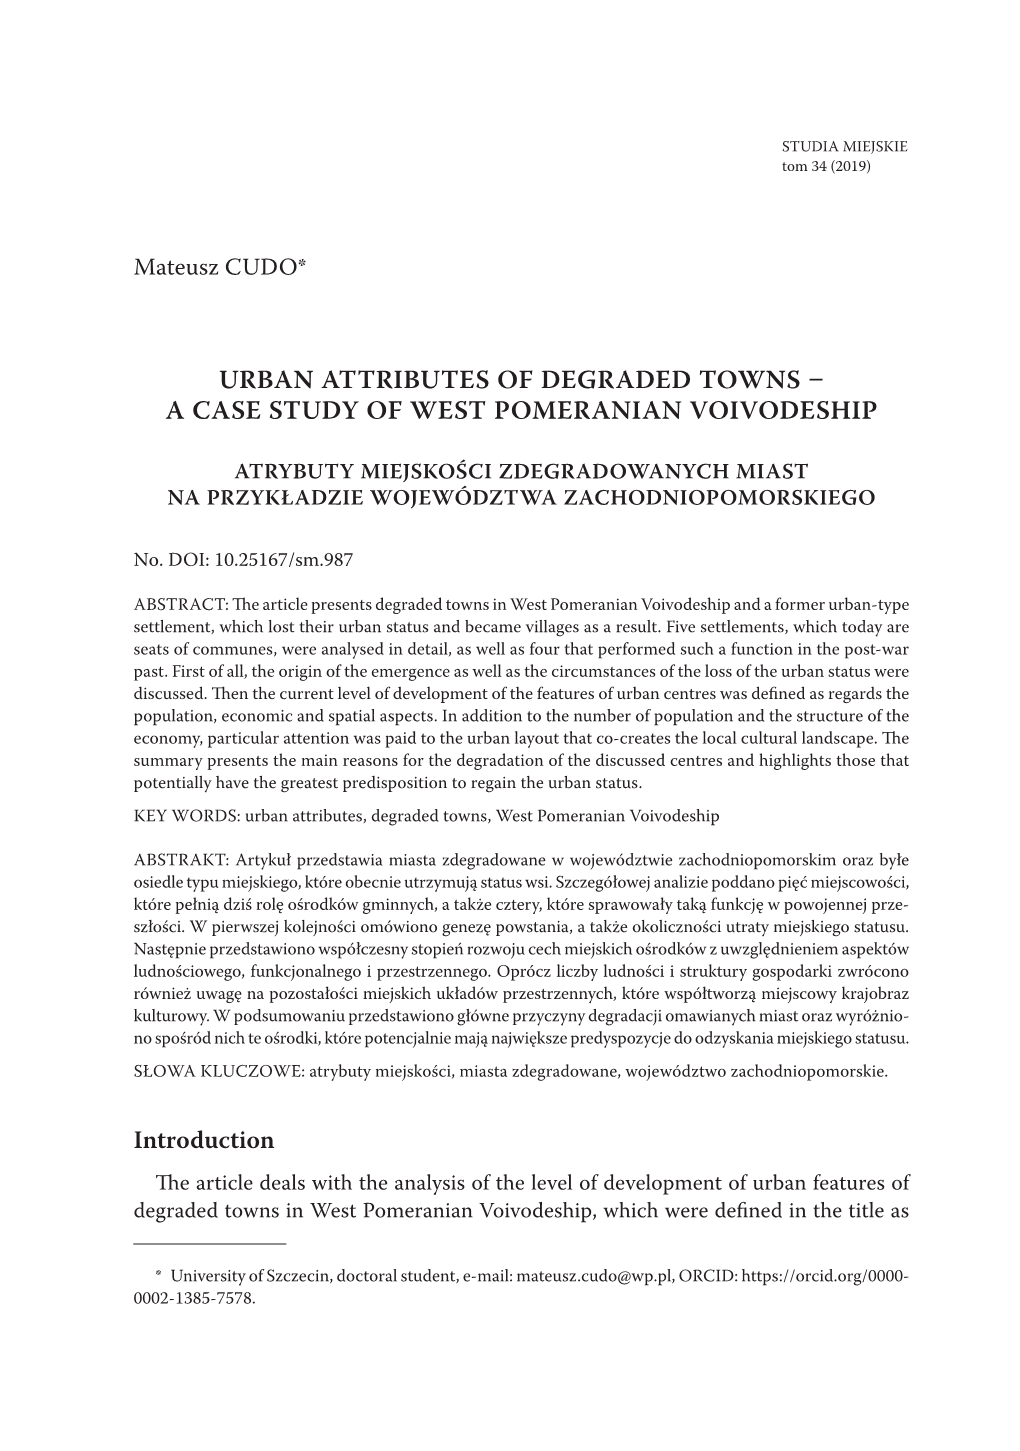 A Case Study of West Pomeranian Voivodeship